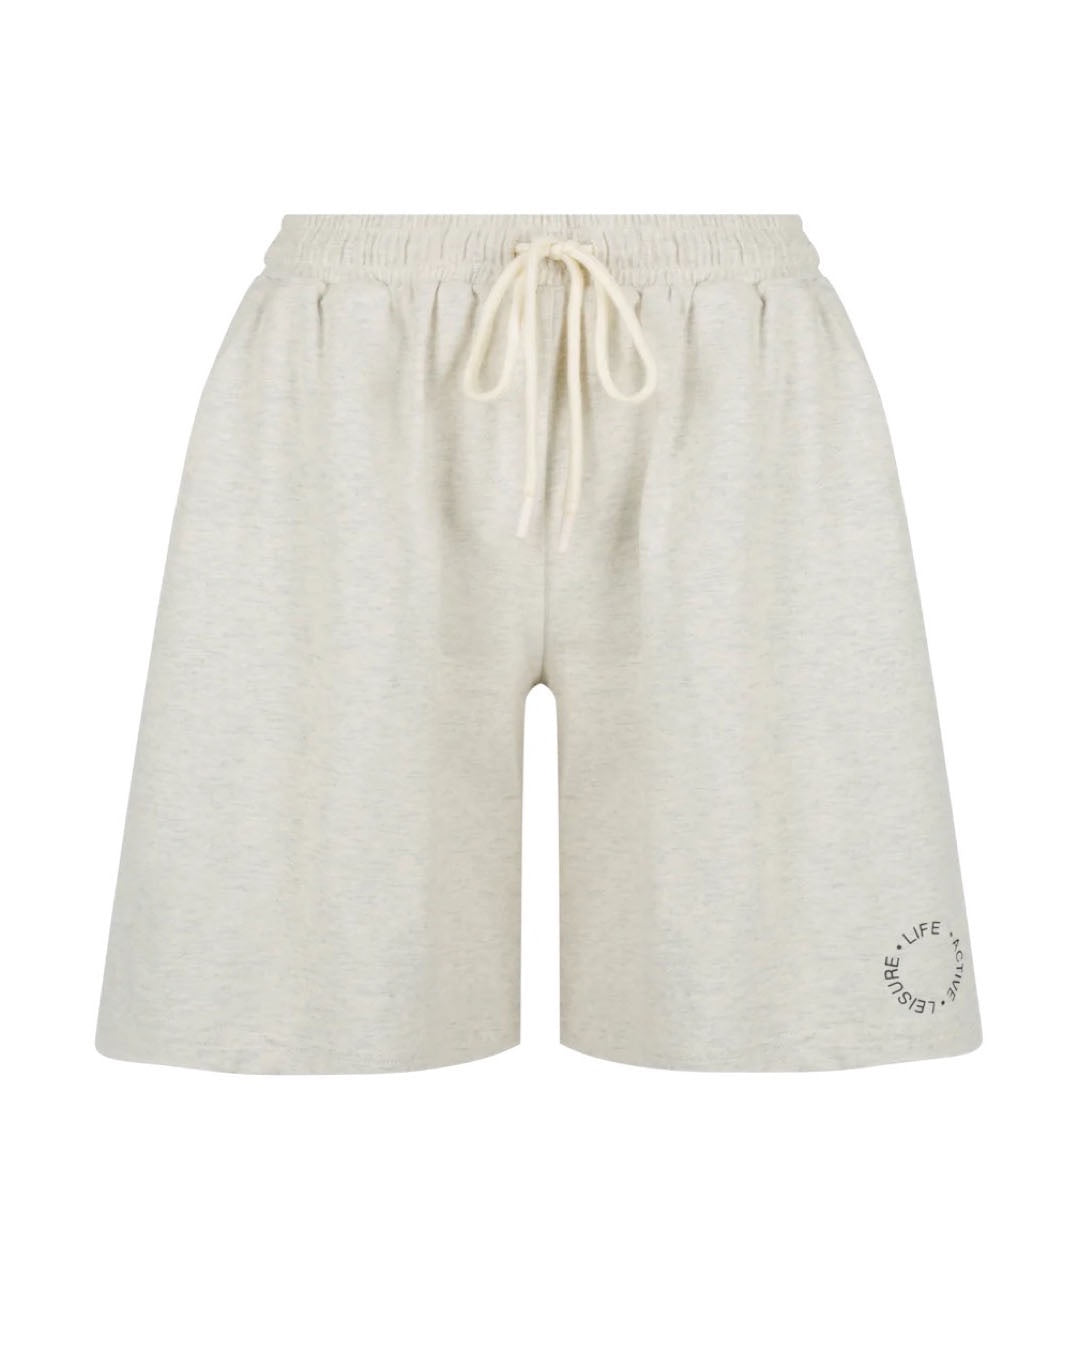 Sport Short - Grey Marle Shorts by Pinky & Kamal - Prae Store